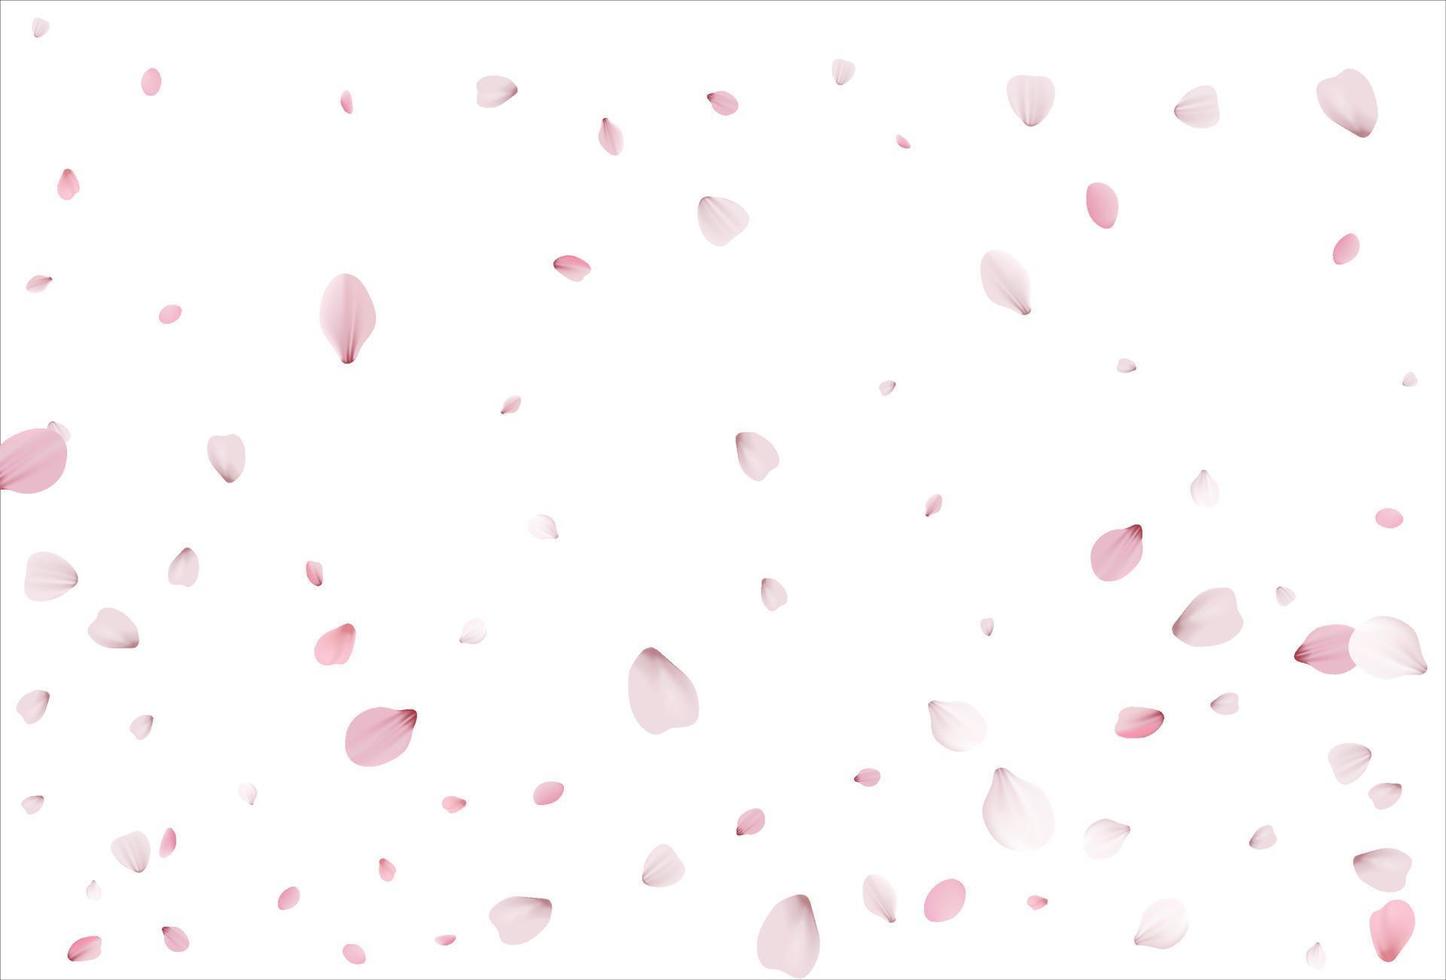 Sakura-Blütenblätter Hintergrund. kirschblütenhintergrund vektor